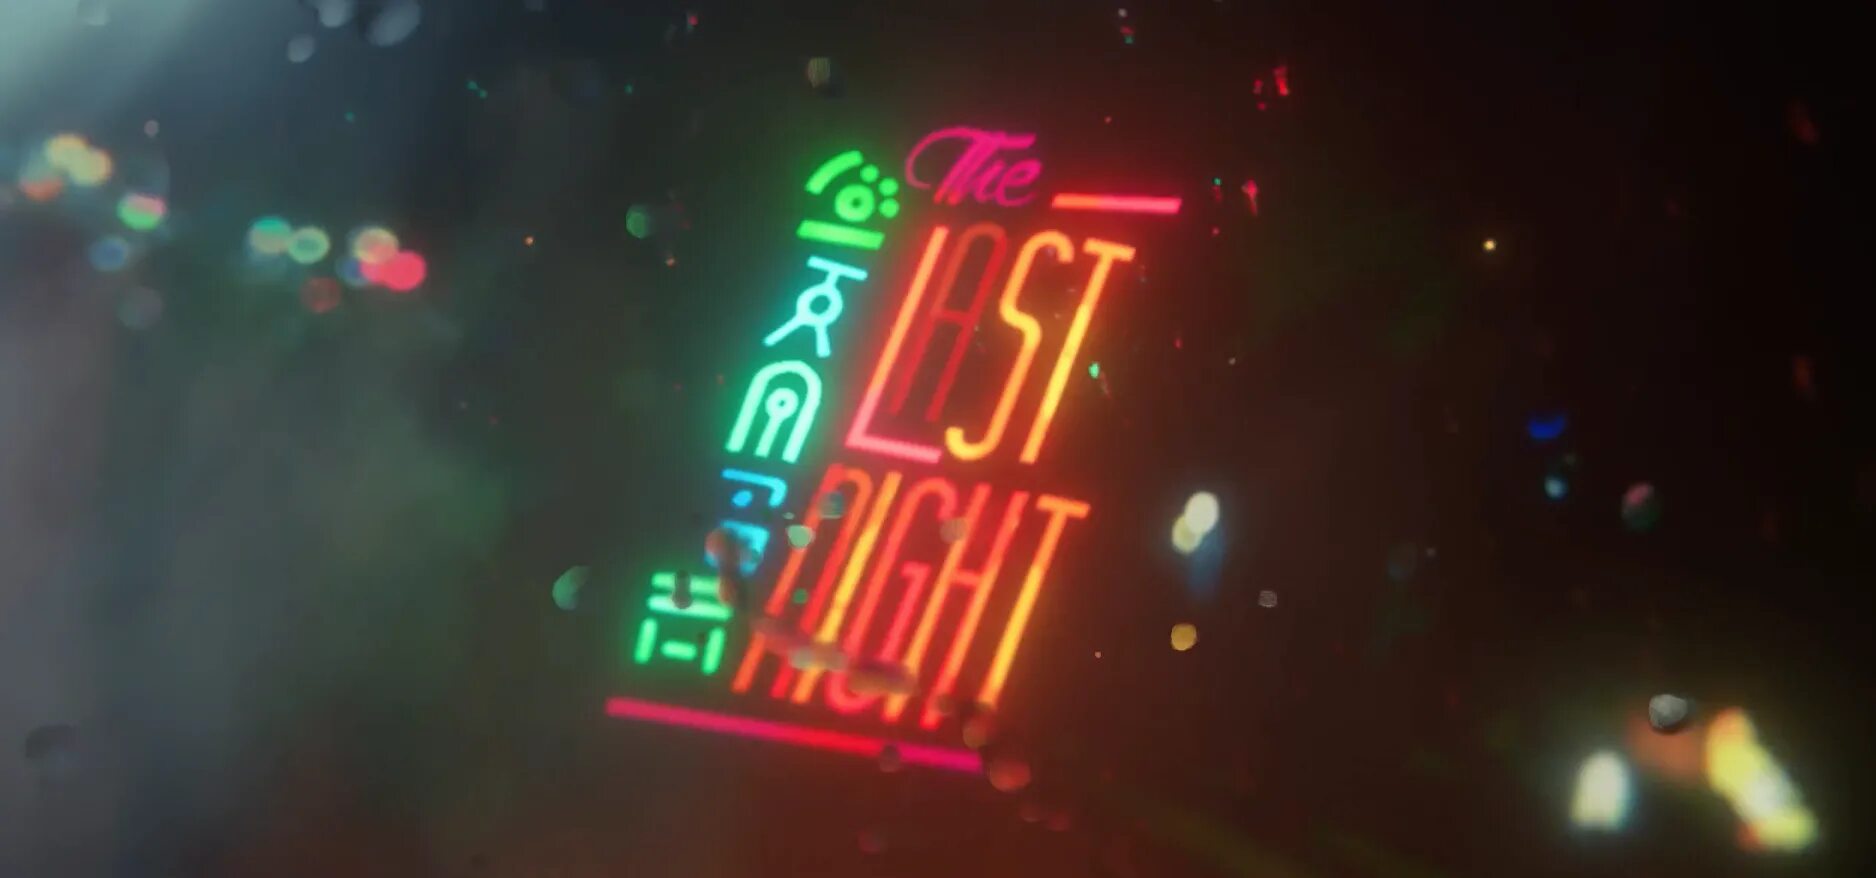 Last night city. The last Night (2021). Ласт Найт игра. The last Night игра. Пиксельные Неоновые вывески.